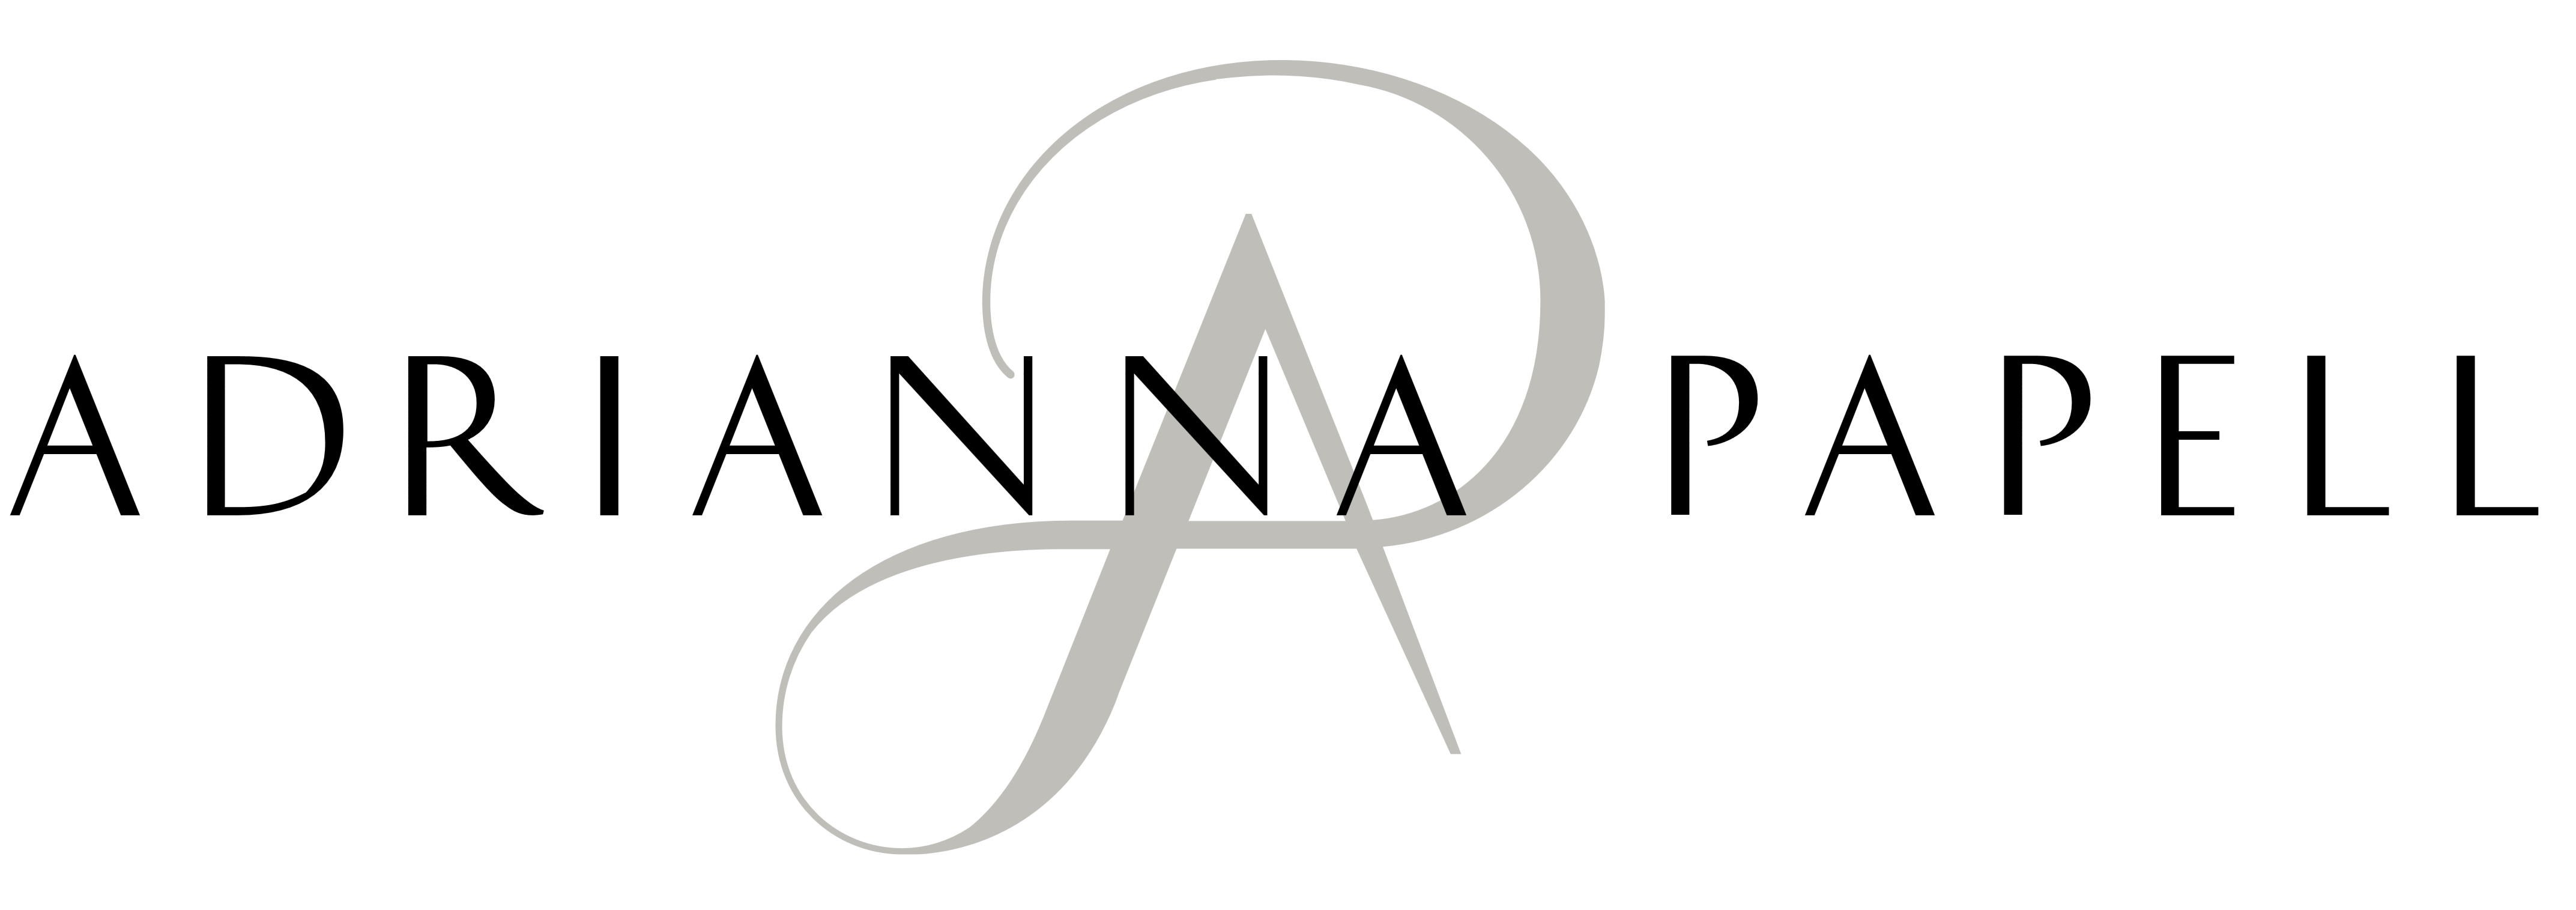 Adrianna Papell logo, logotype